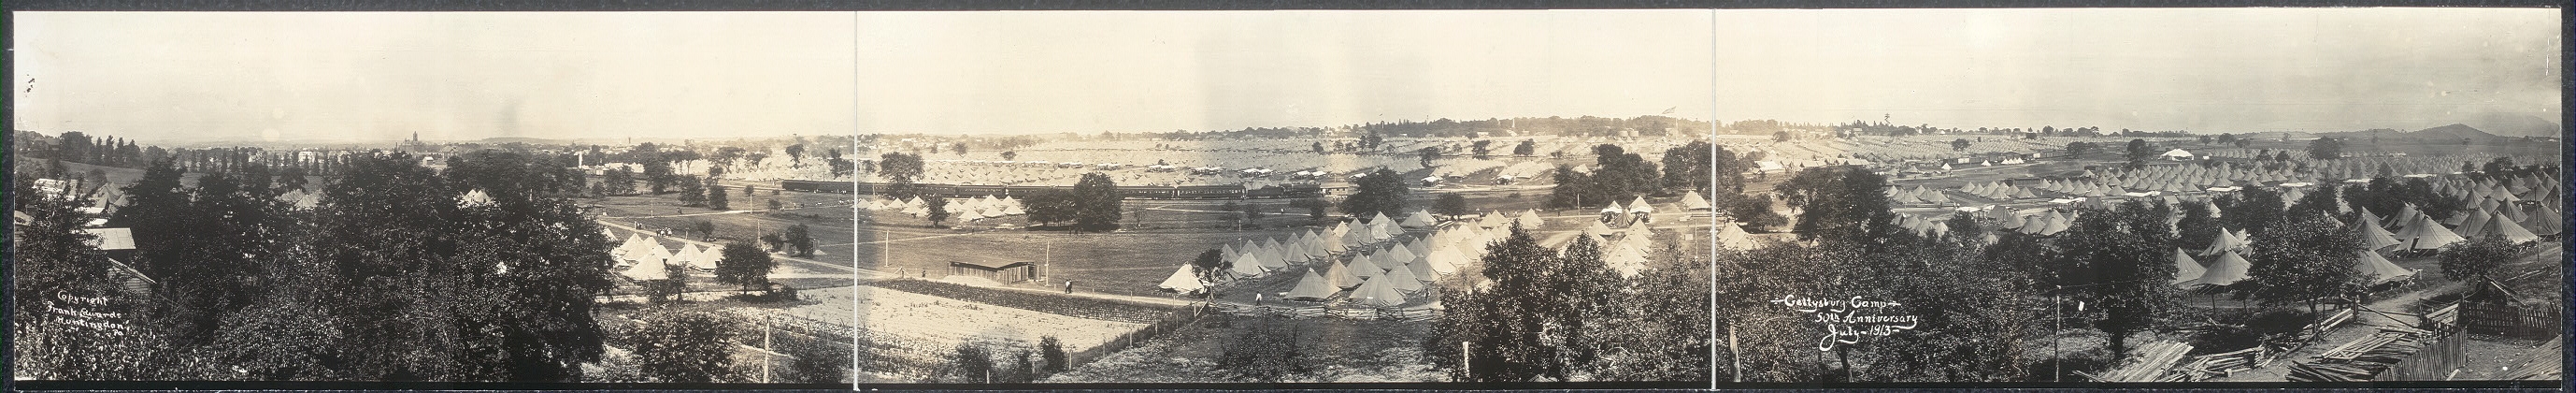 Gettysburg Camp, 50th Anniversary, July, 1913